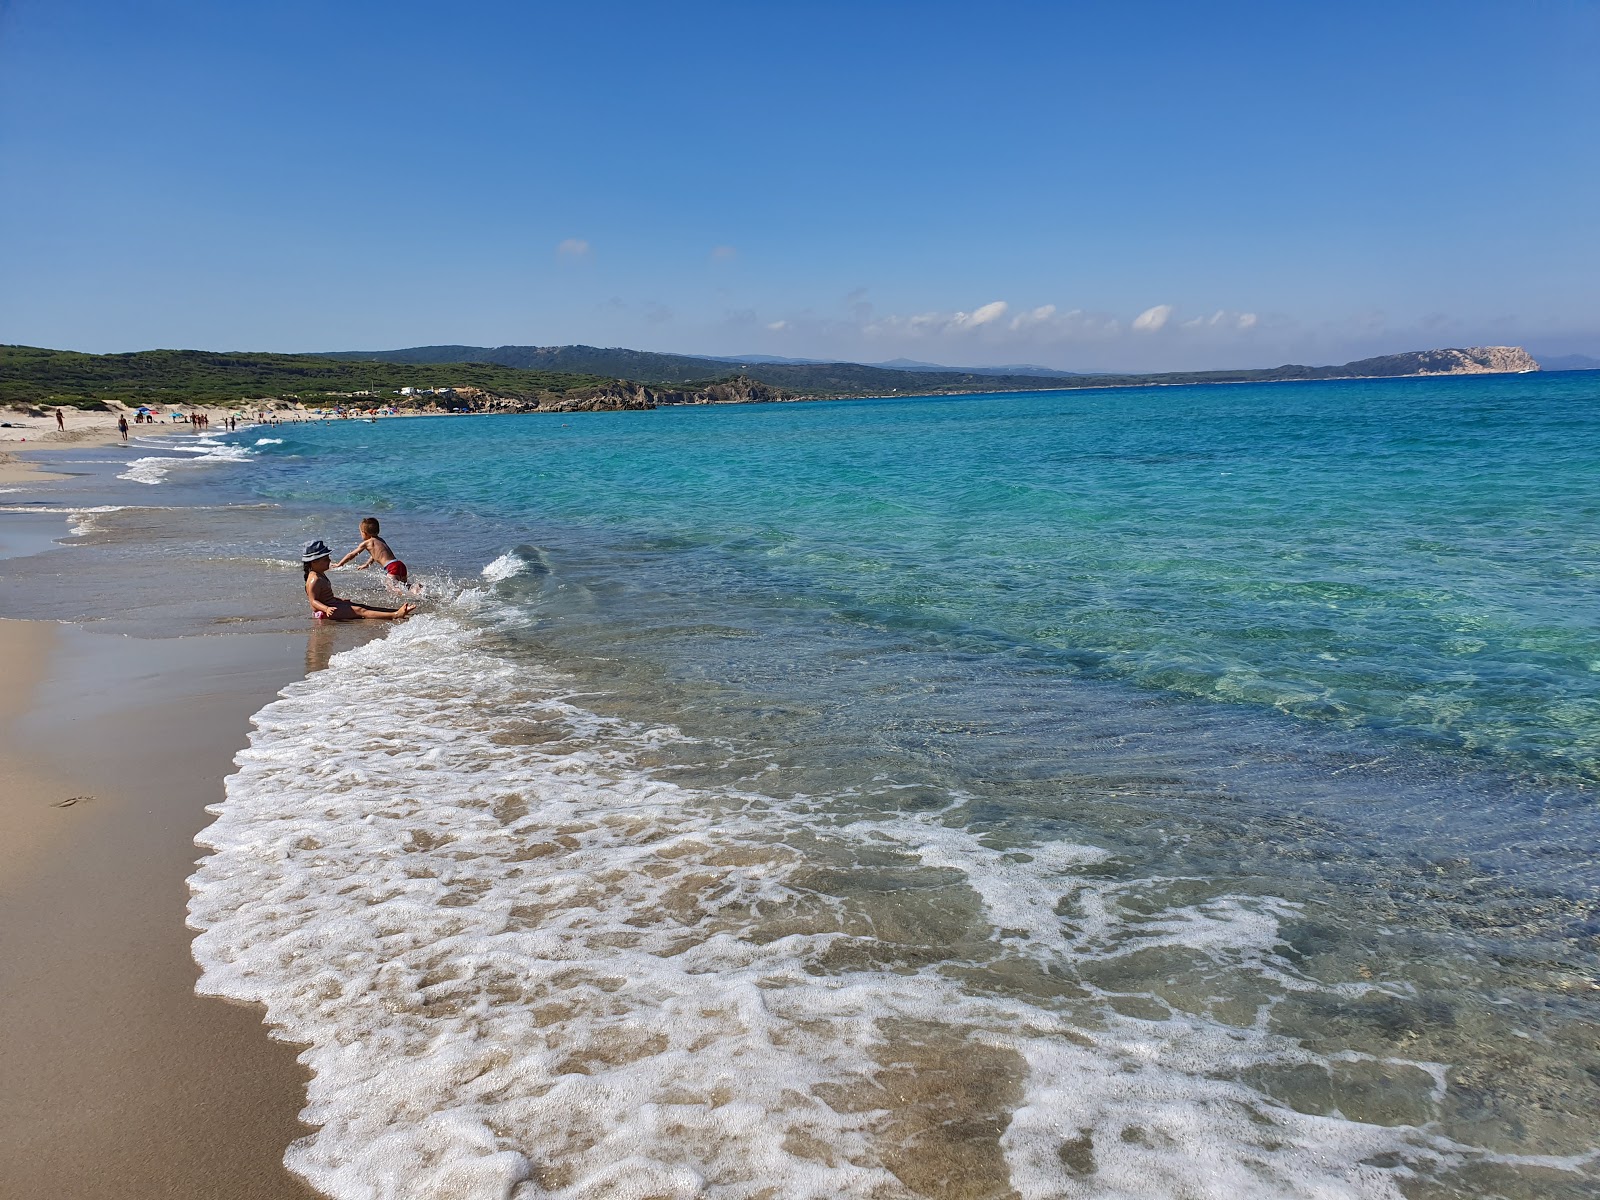 Fotografie cu Spiaggia Monti Russu - locul popular printre cunoscătorii de relaxare